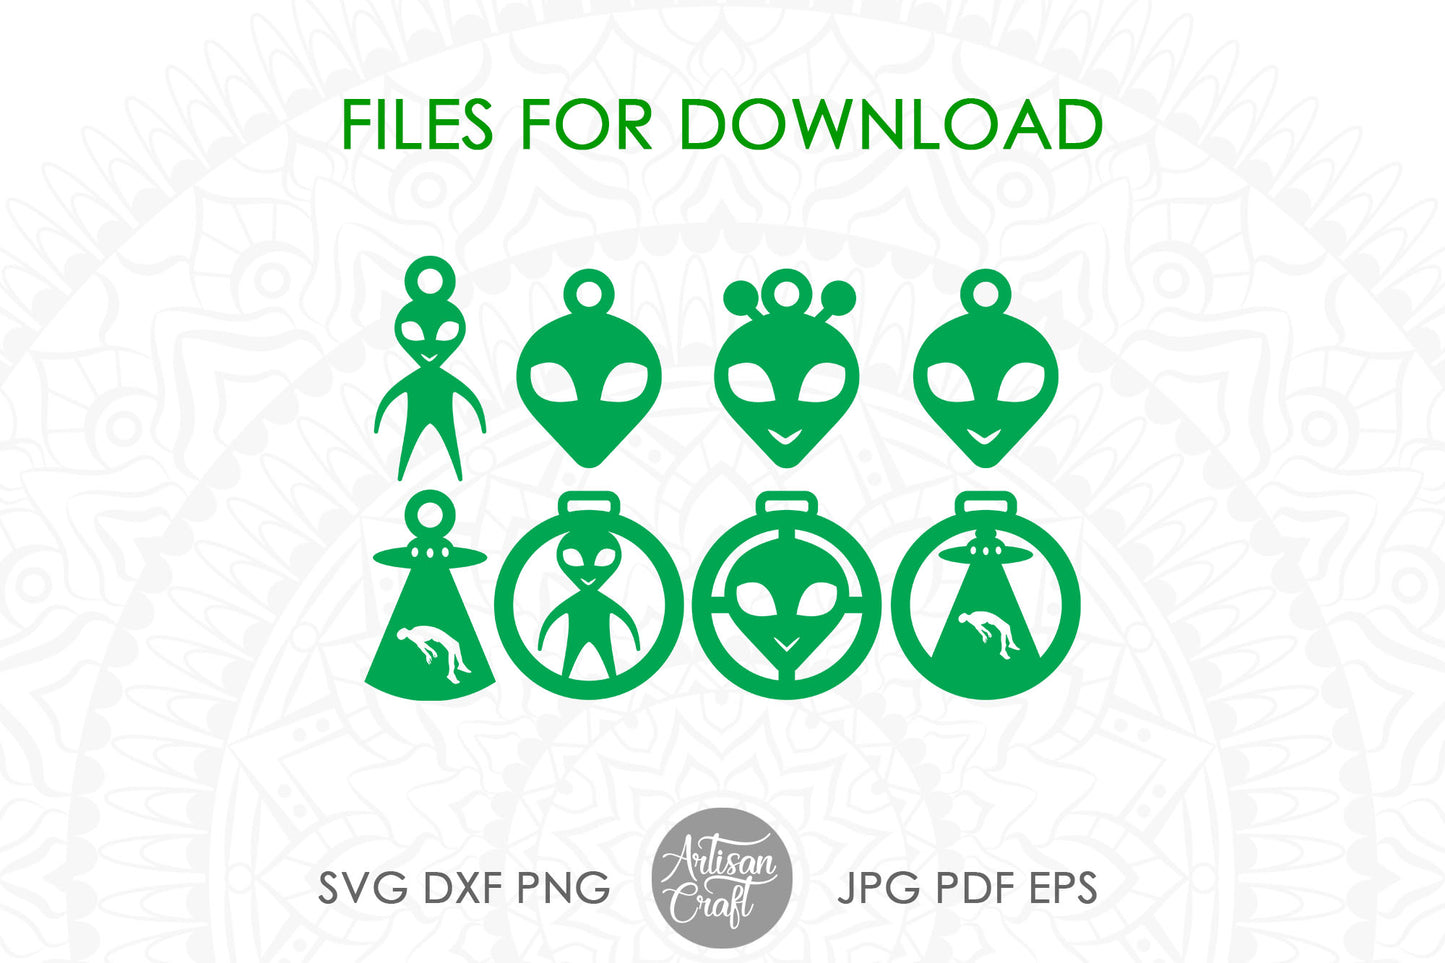 Alien ornament SVG cut file